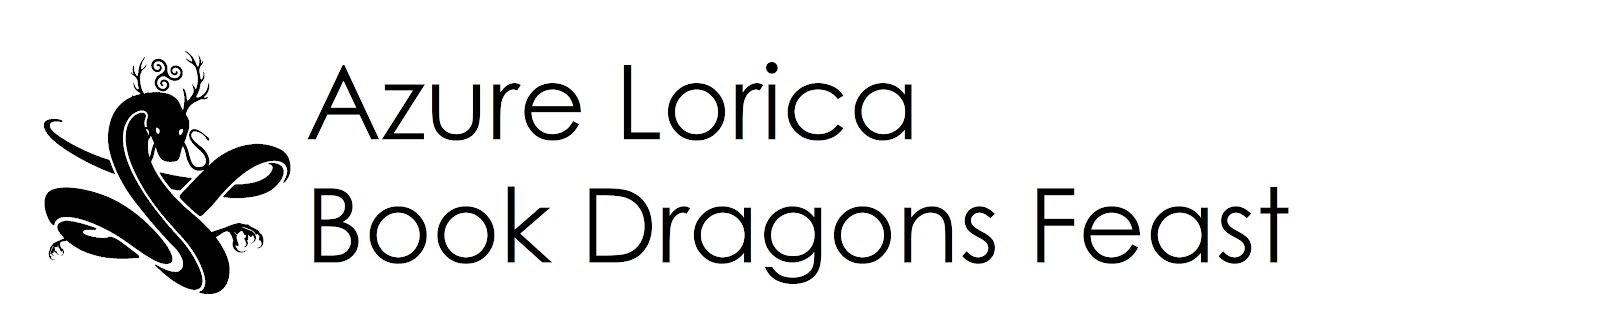 Azure Lorica Book Dragons Feast